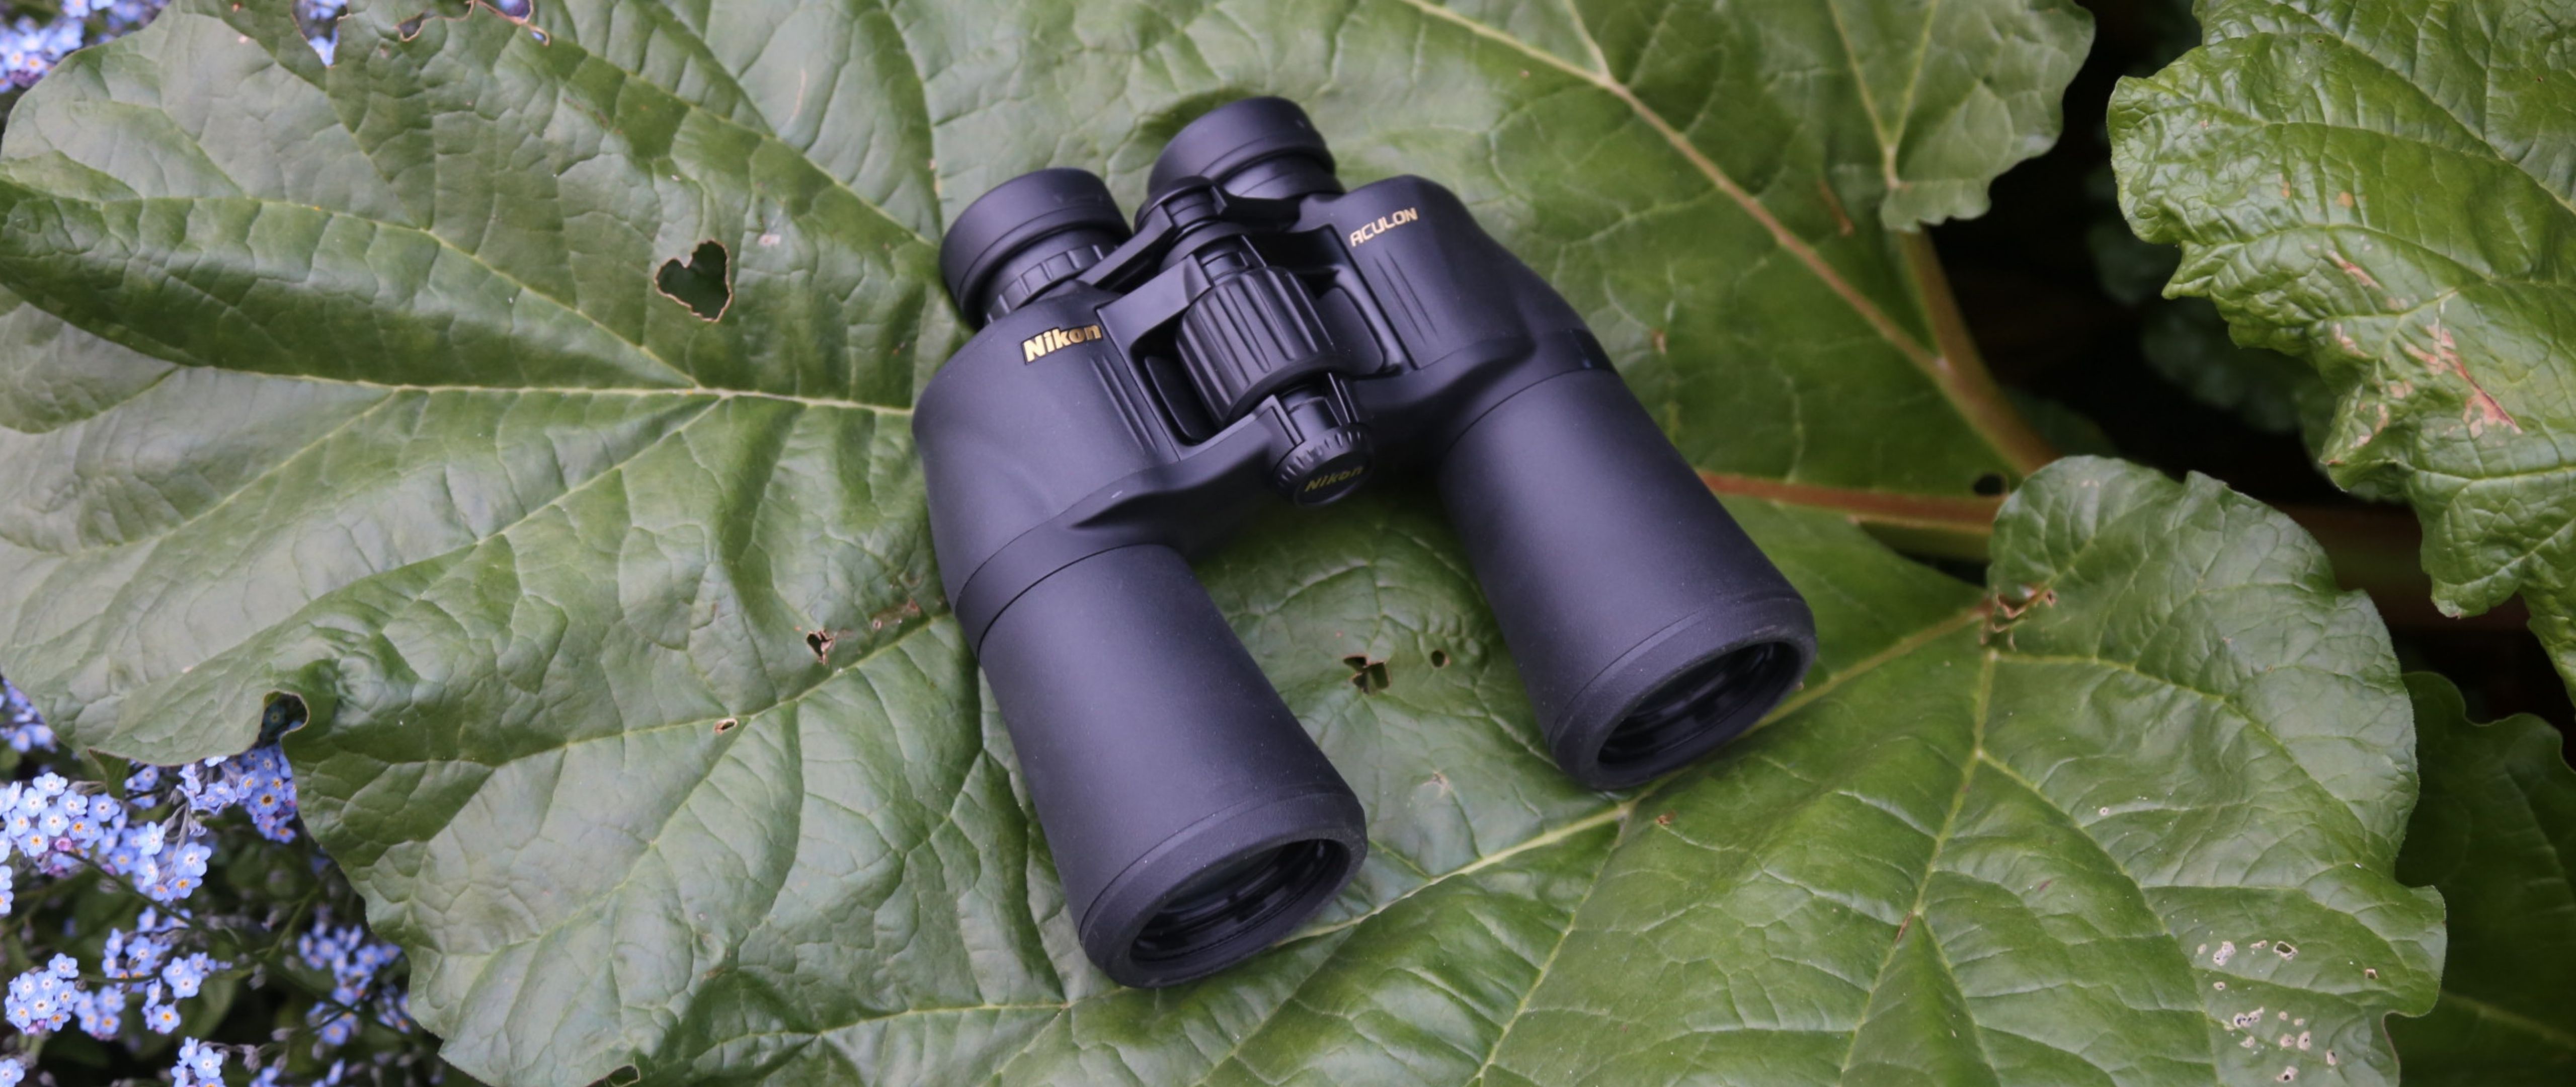 Black Nikon ACULON A211 10x50 Binoculars, Model Name/Number: 8248 at Rs  6490 in New Delhi